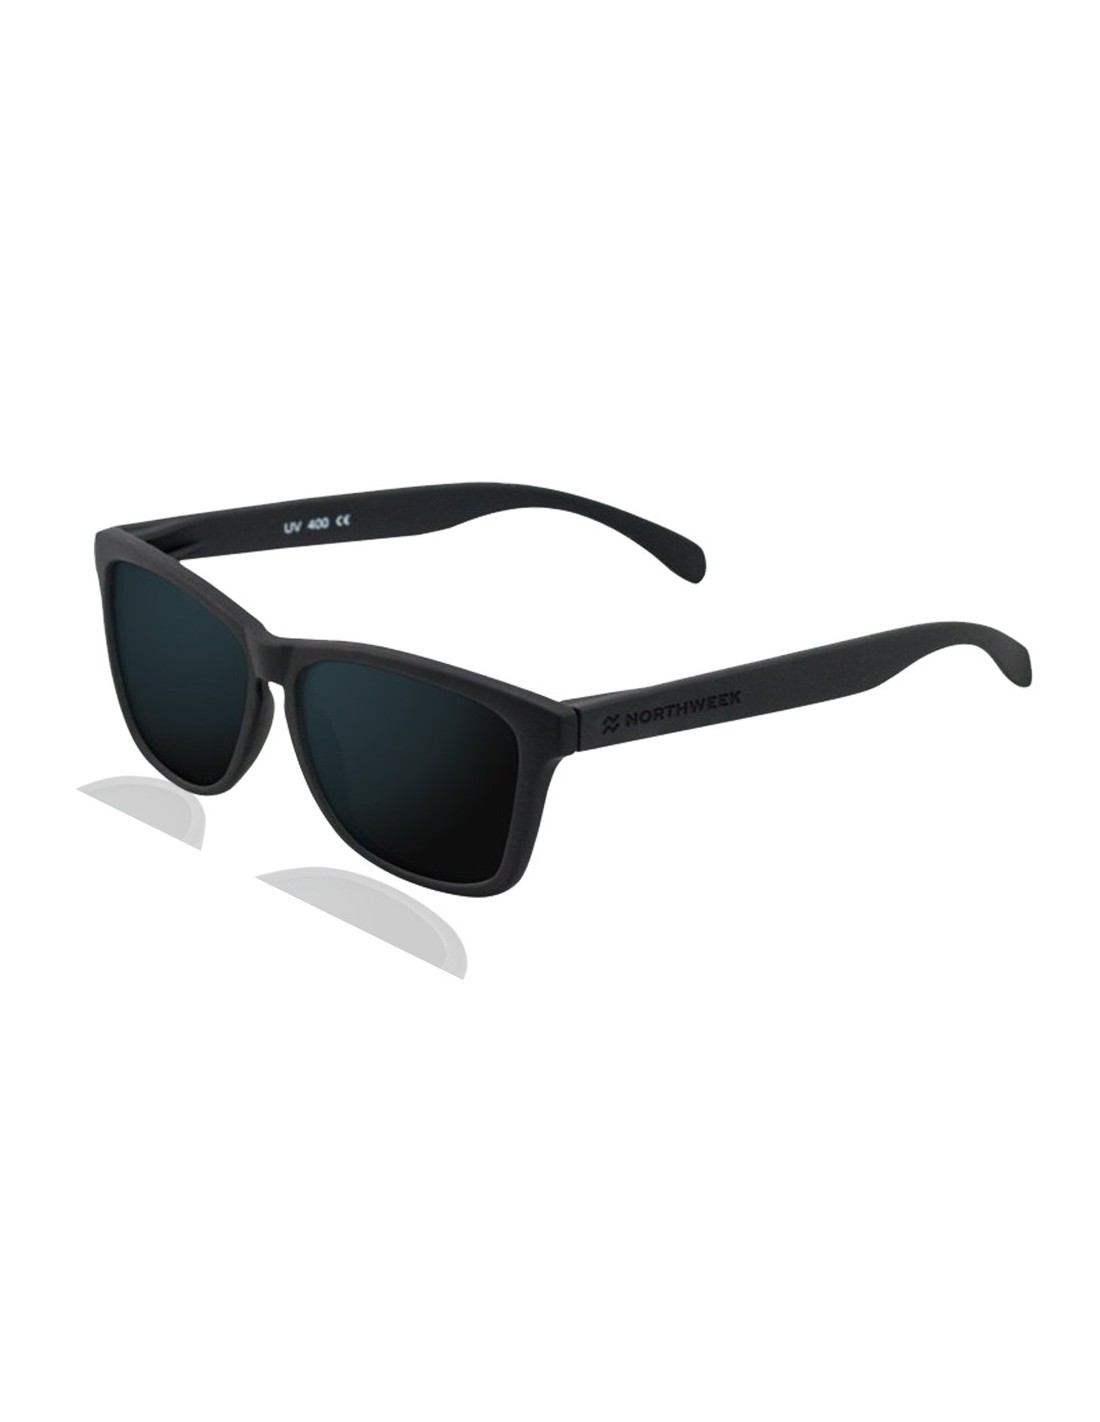 Gafas de sol Sunglasses Northweek Creative Matte black  lente purple polarizada 